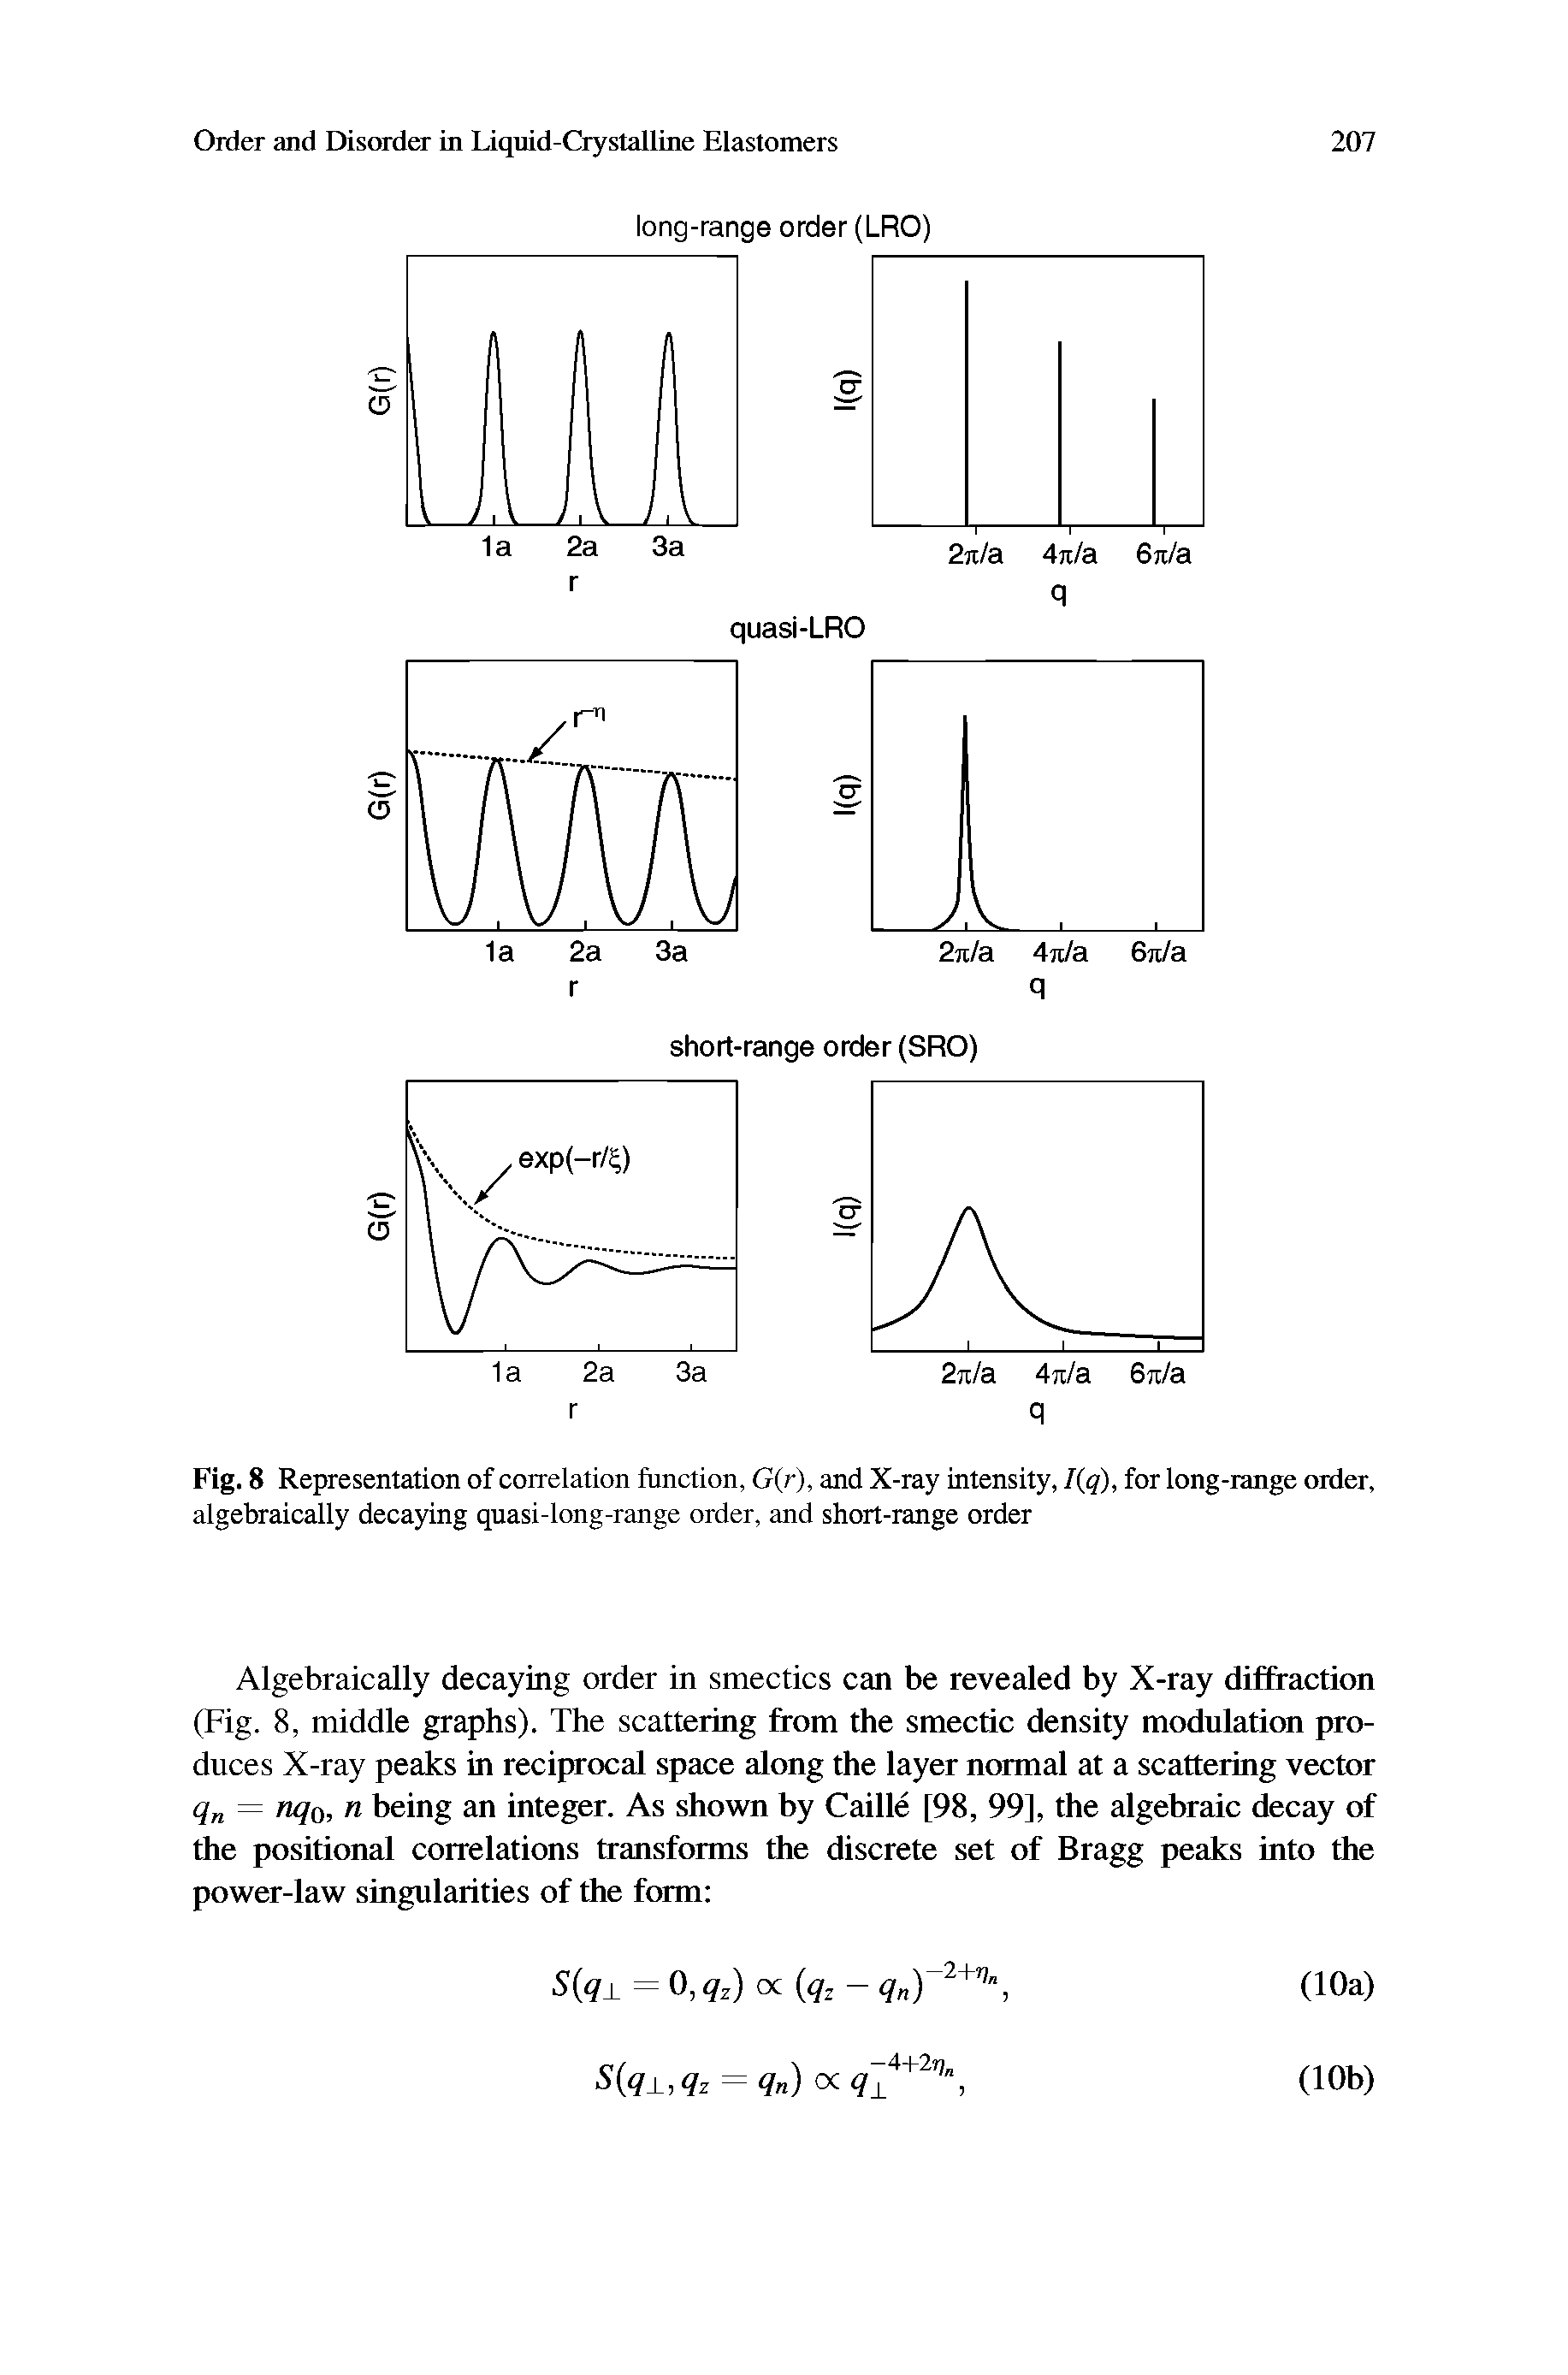 Fig. 8 Representation of correlation function, G(r), and X-ray intensity, /( ), for long-range order, algebraically decaying quasi-long-range order, and short-range order...